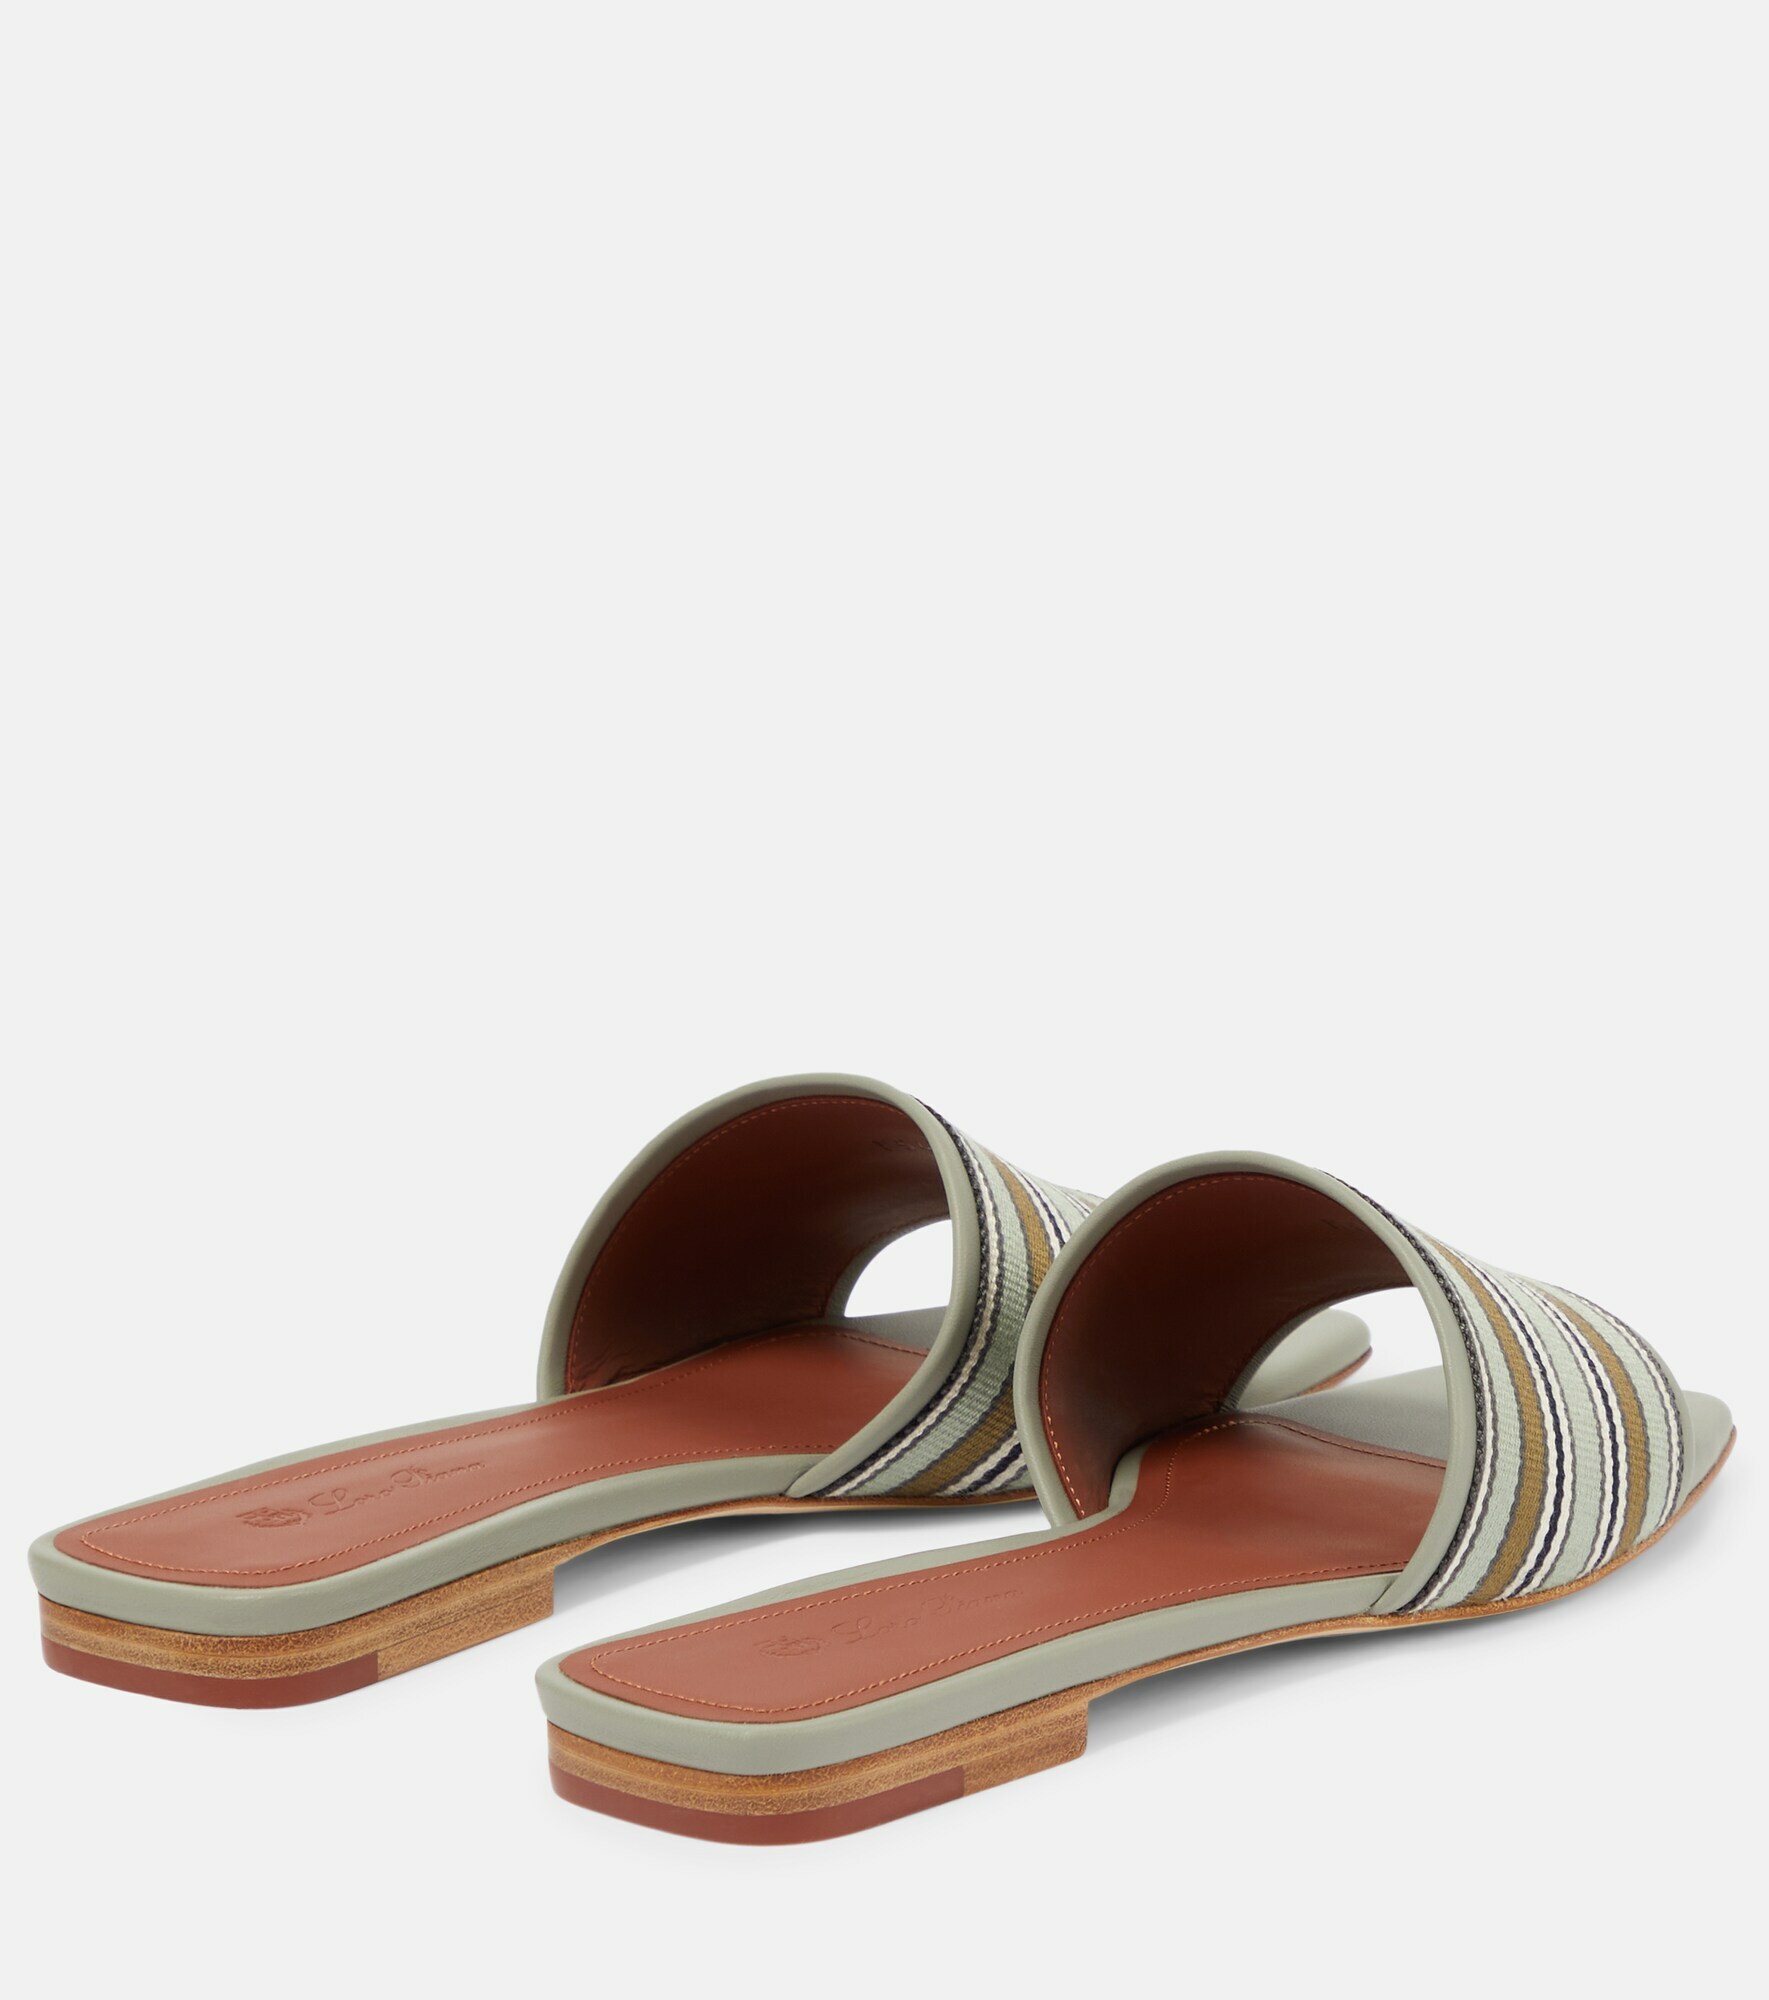 Loro Piana - The Suitcase Stripe flat sandals Loro Piana